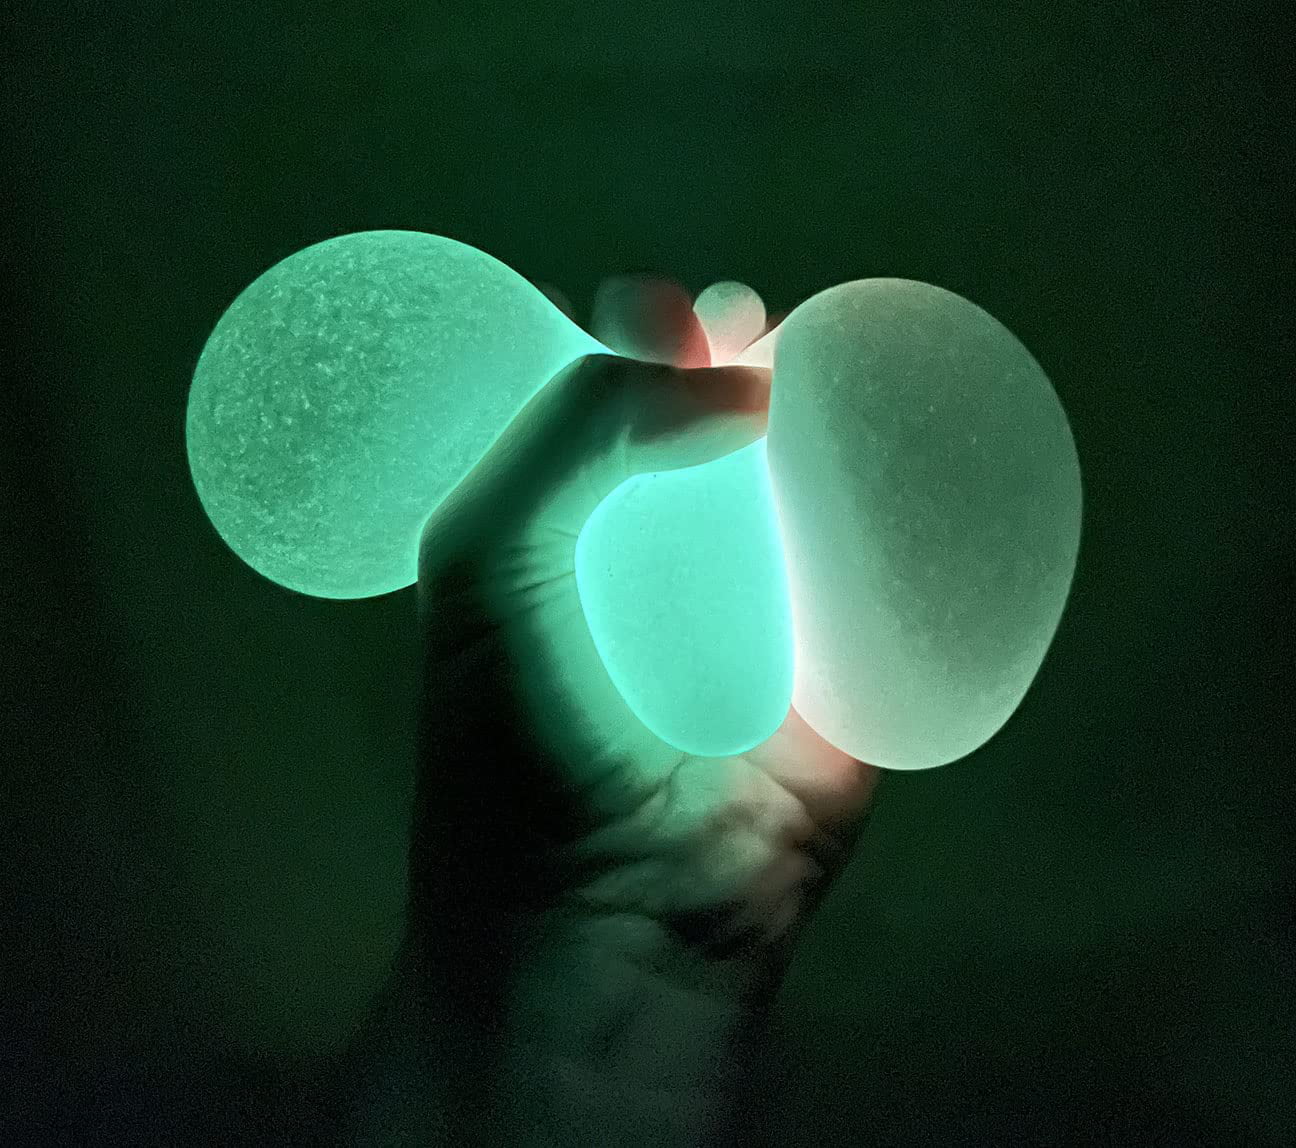 Squish Sticky Glow in The Dark Orbs, 2 Packs with 3 Balls Each, Glowin ·  Art Creativity